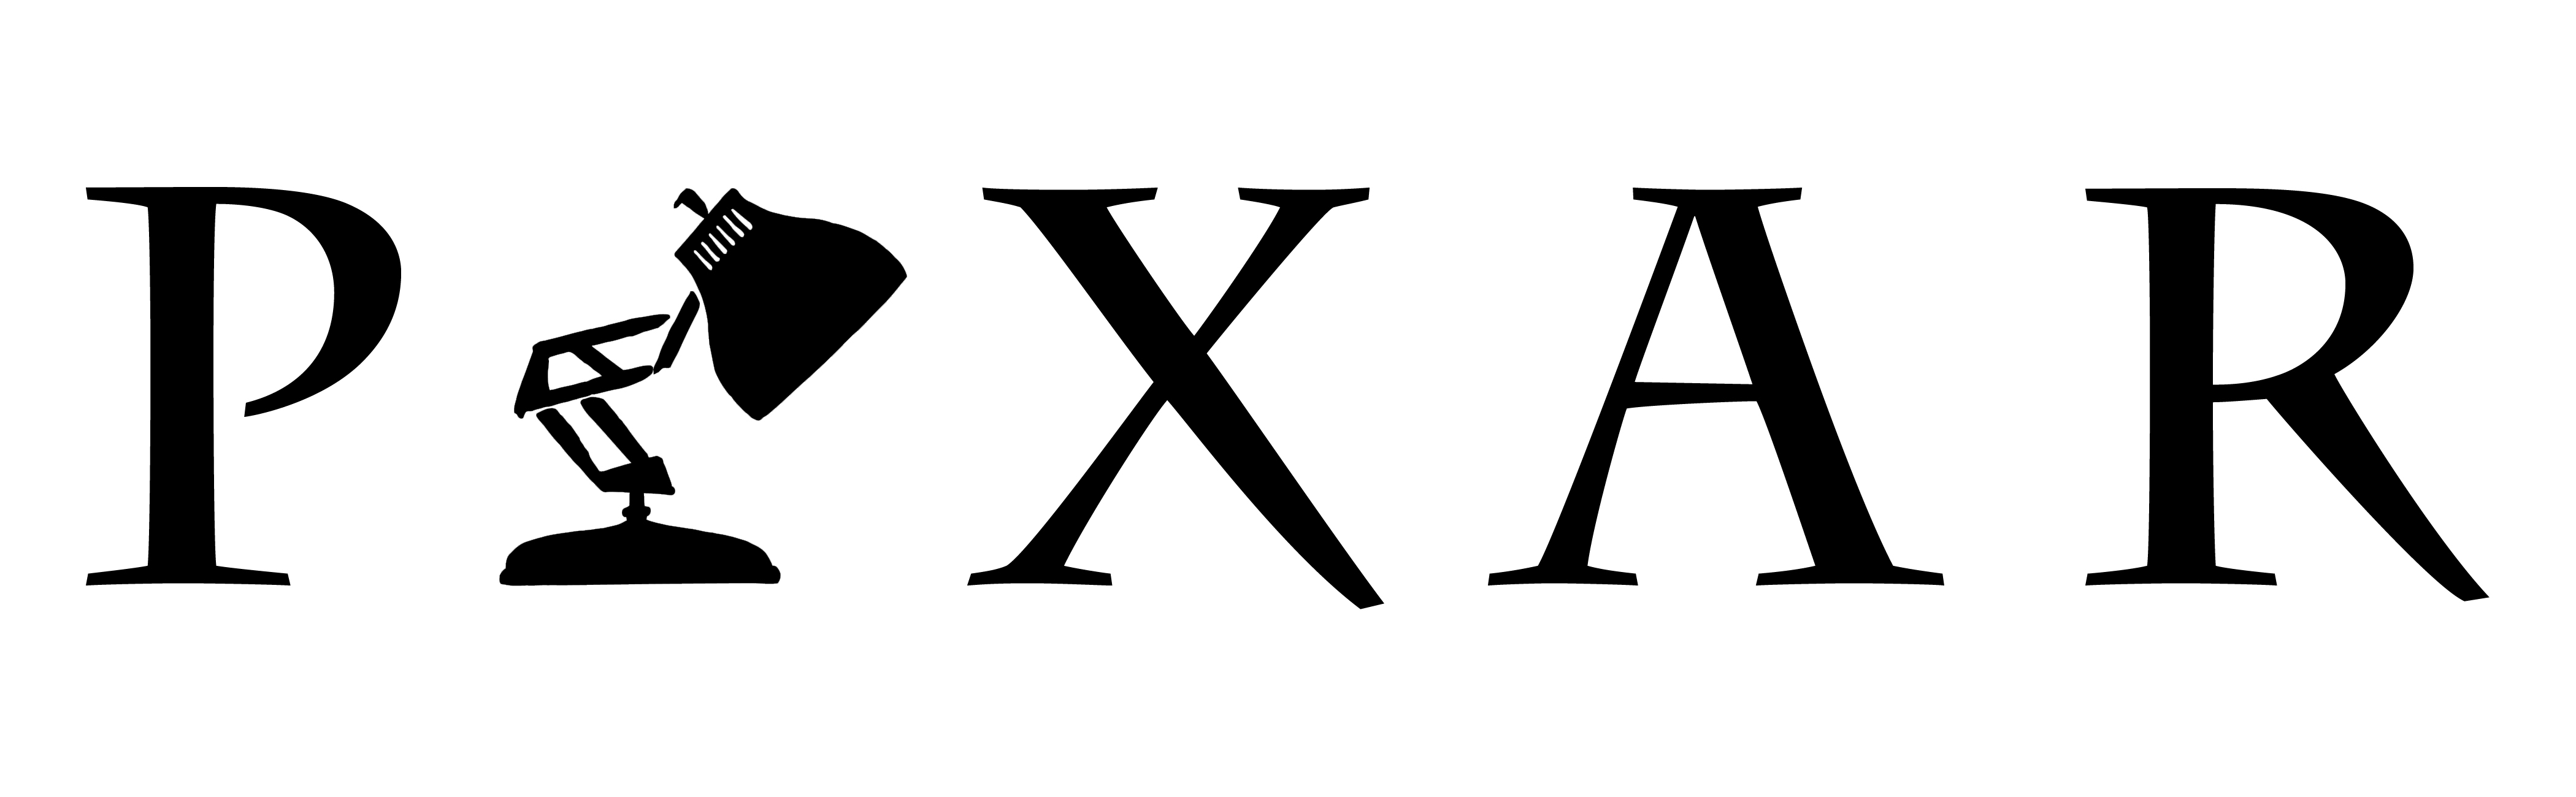 Pixar Logo PNG - 175996